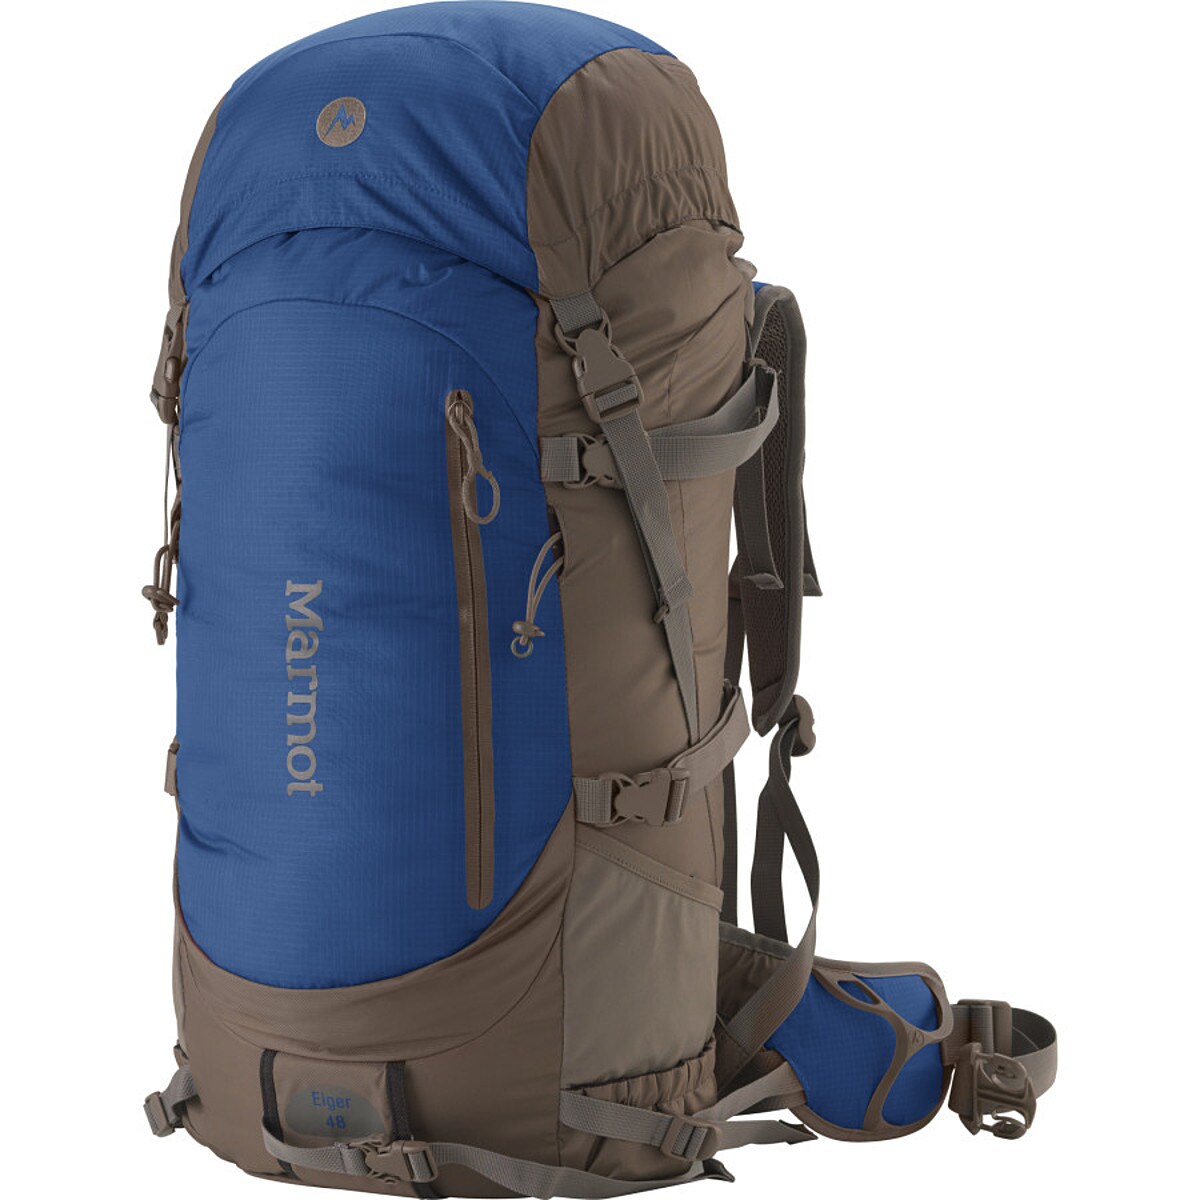 Marmot Eiger 48 Backpack - 2950cu in - Hike & Camp